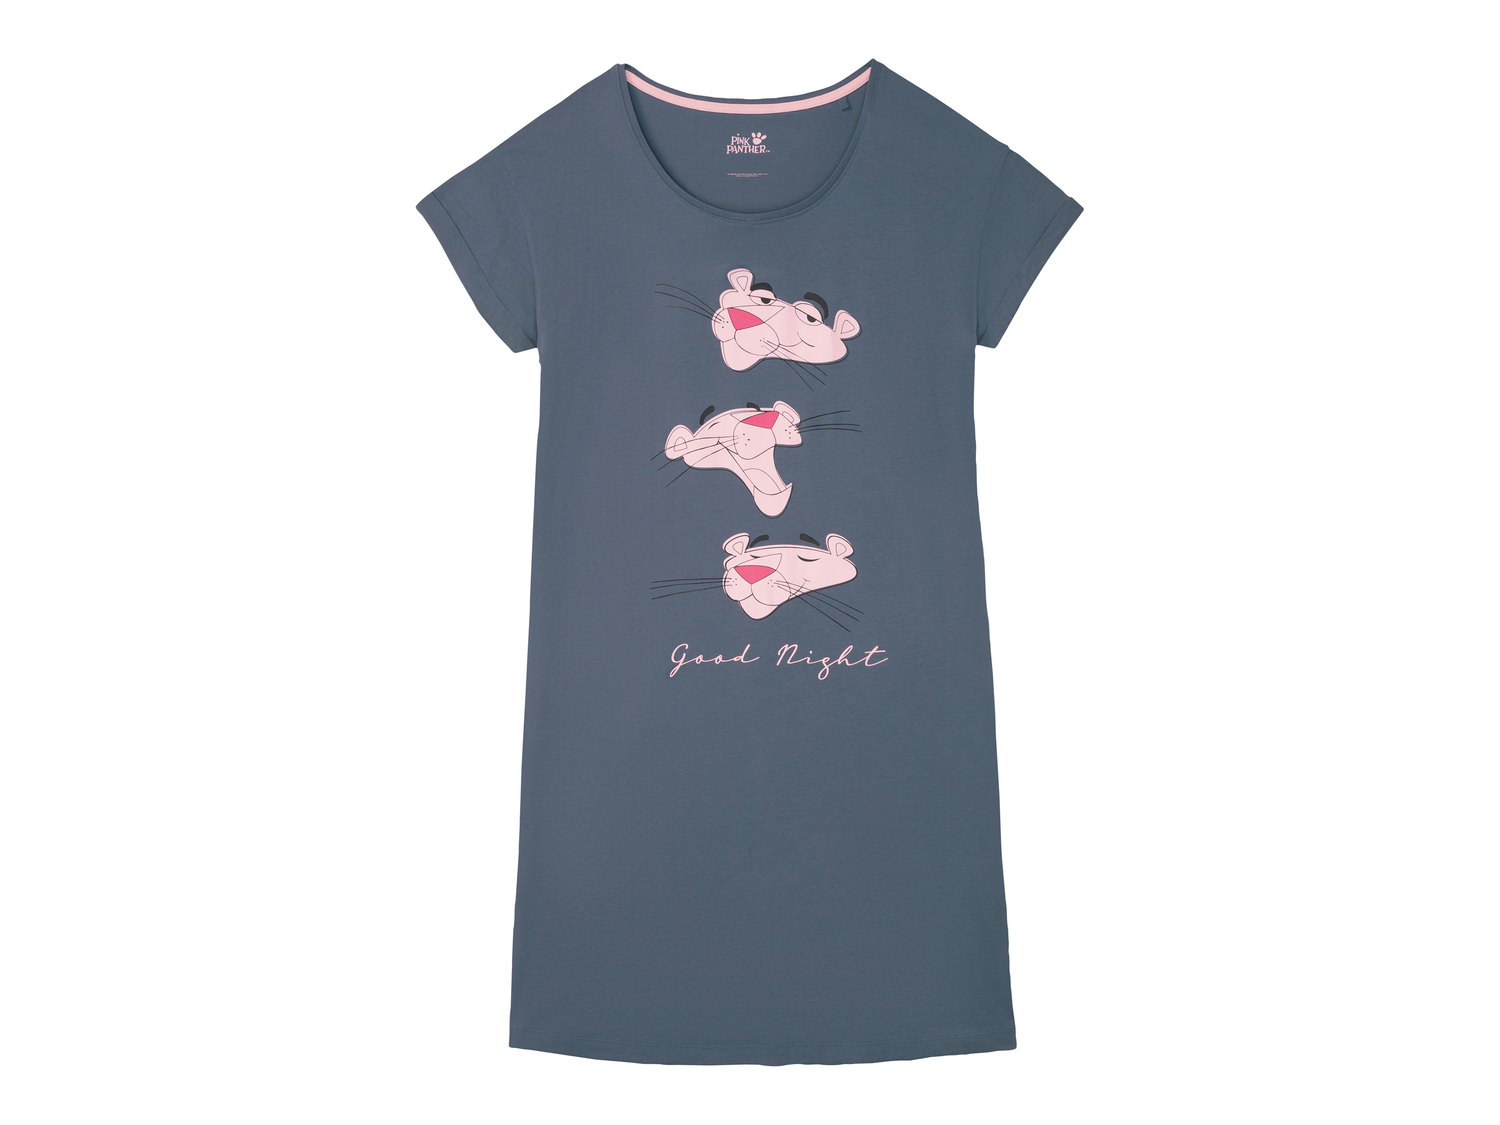 Maxi t-shirt da donna Wonder Woman, Pantera Rosa, Snoopy Oeko-tex, prezzo 5.99 &#8364; ...